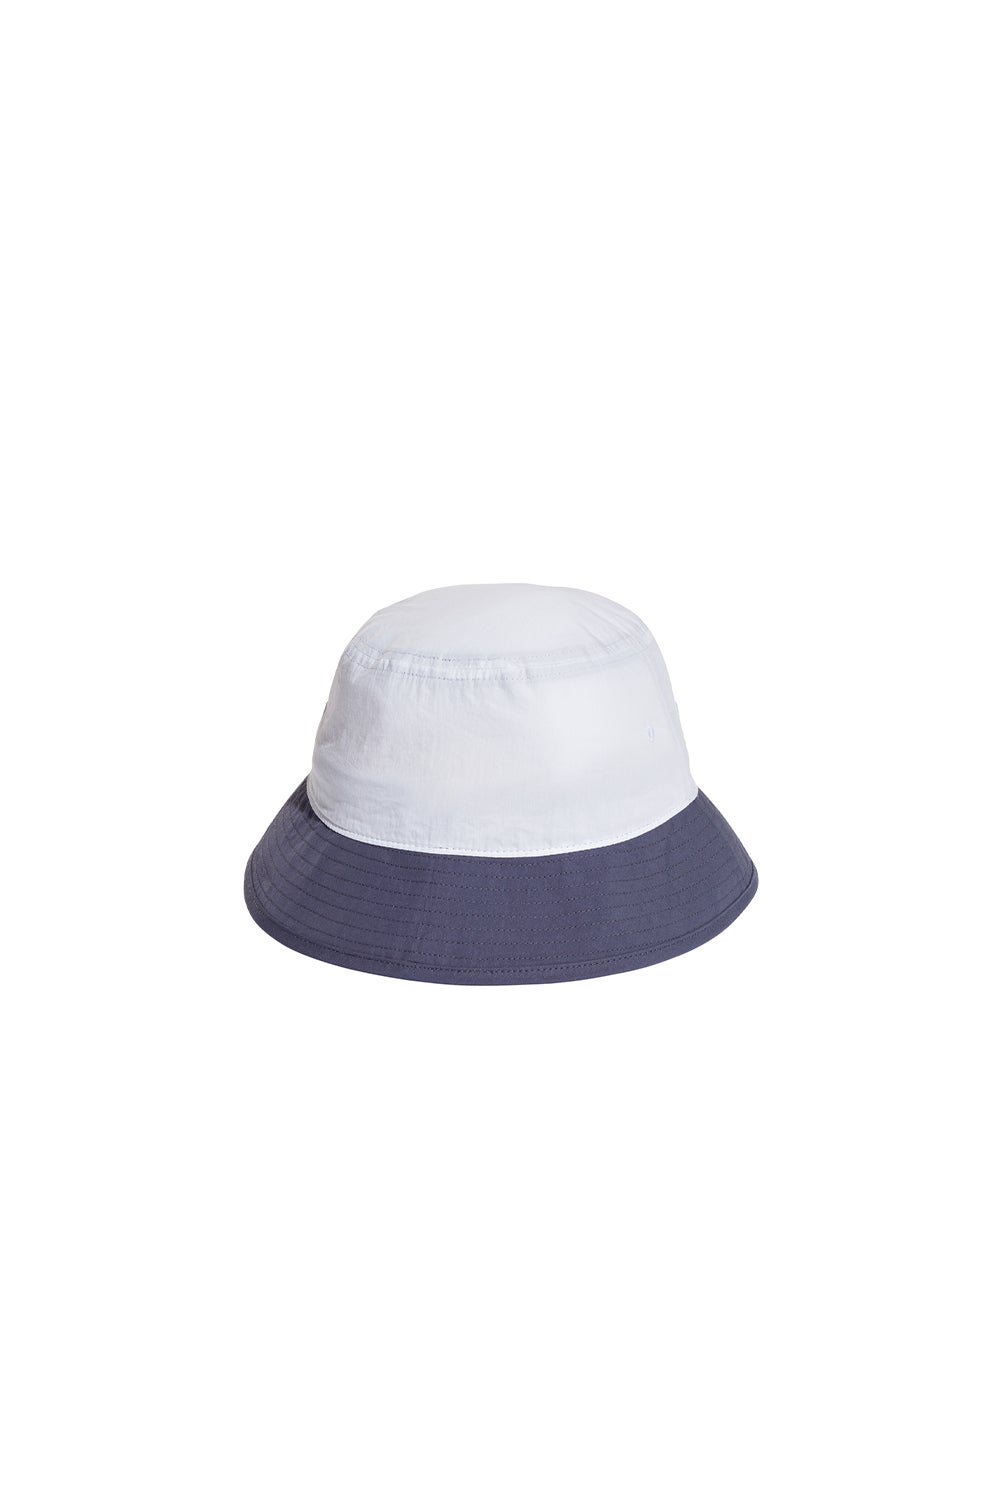 adidas Adicolor Archive Bucket Hat White/Shadow Navy